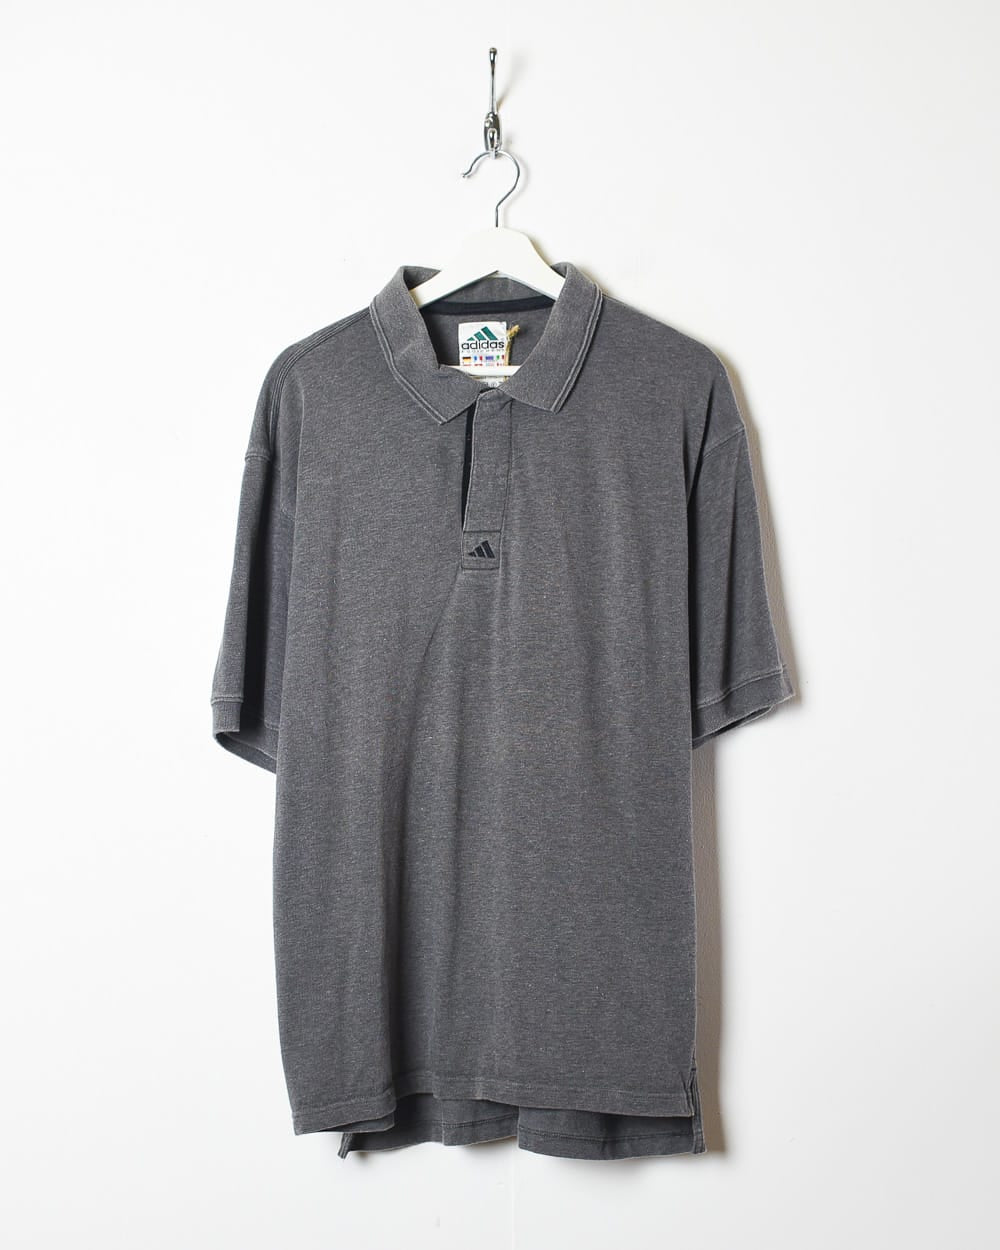 Grey Adidas Equipment Polo Shirt - X-Large